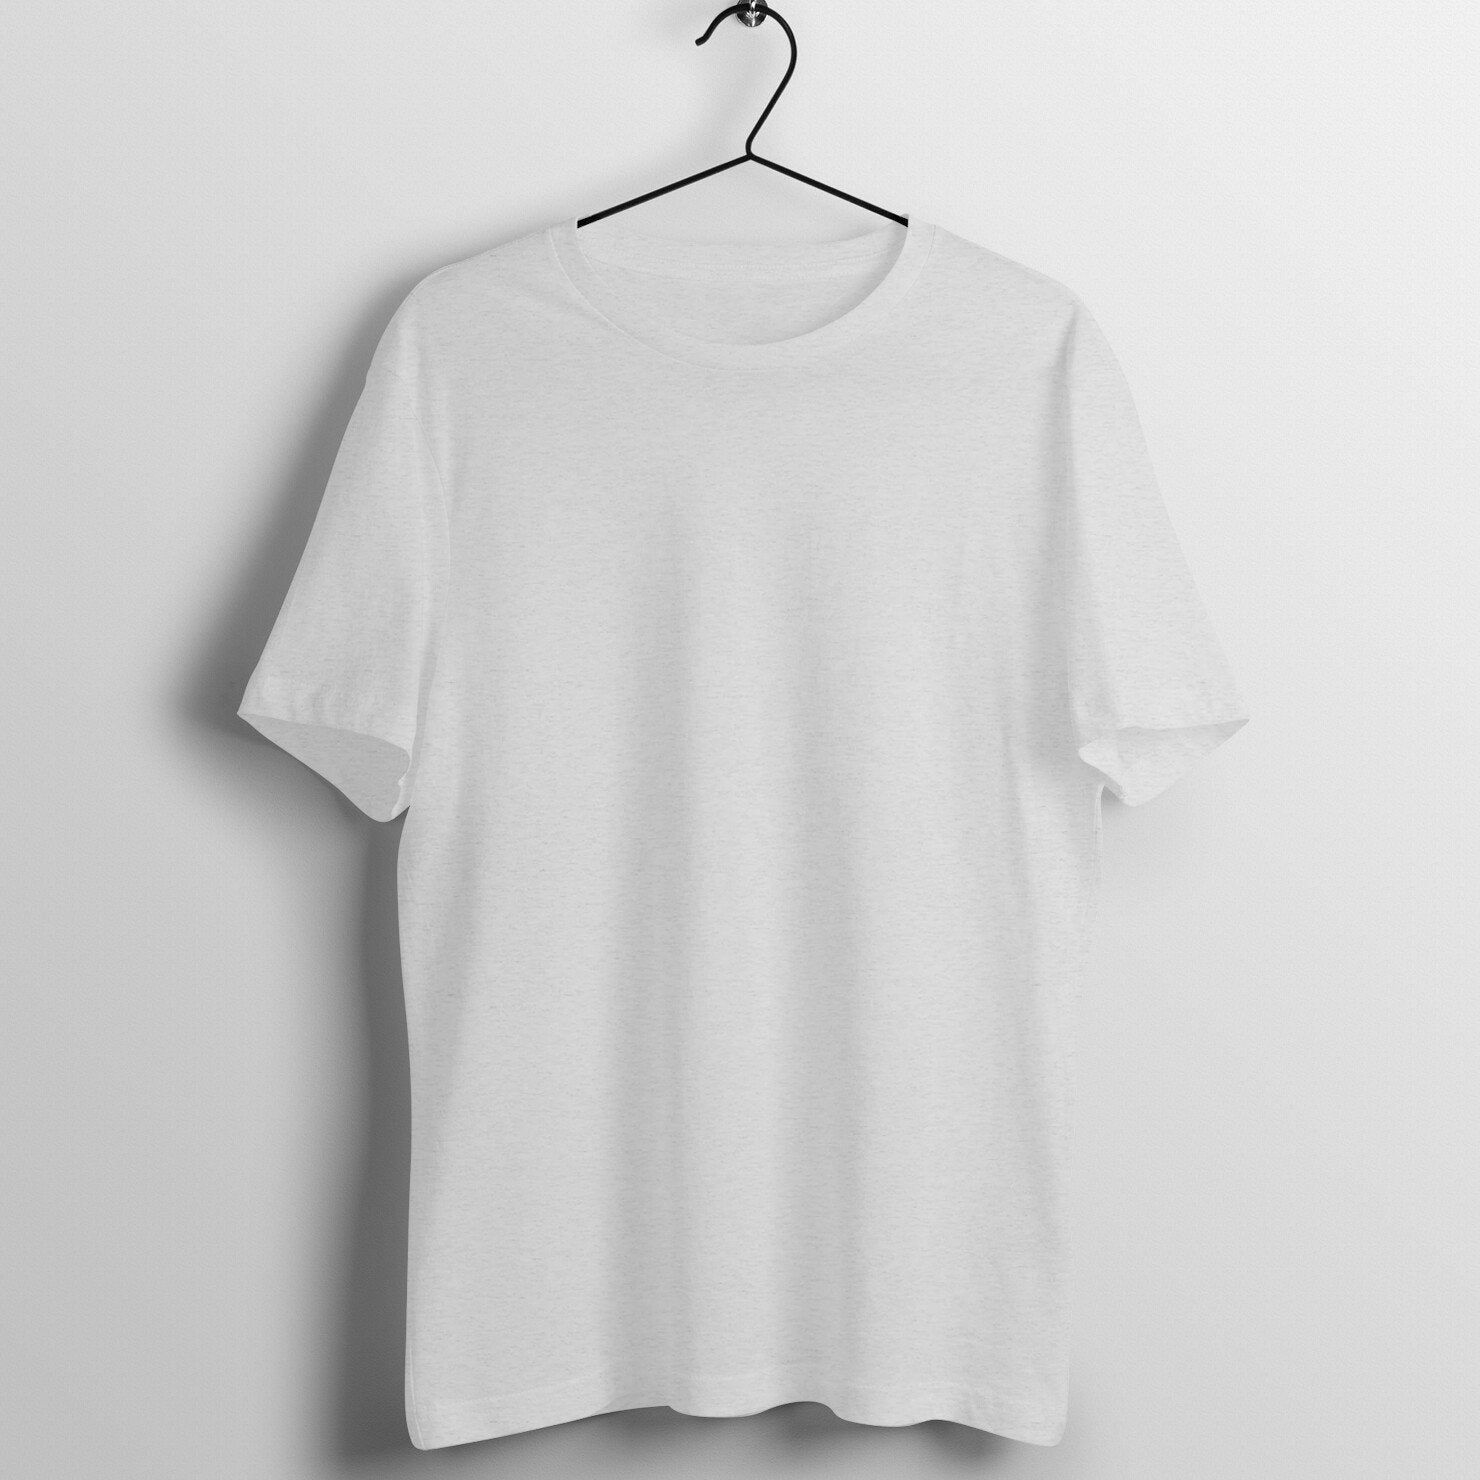 Melange Grey Half Sleeve T-Shirt - Insane Tees